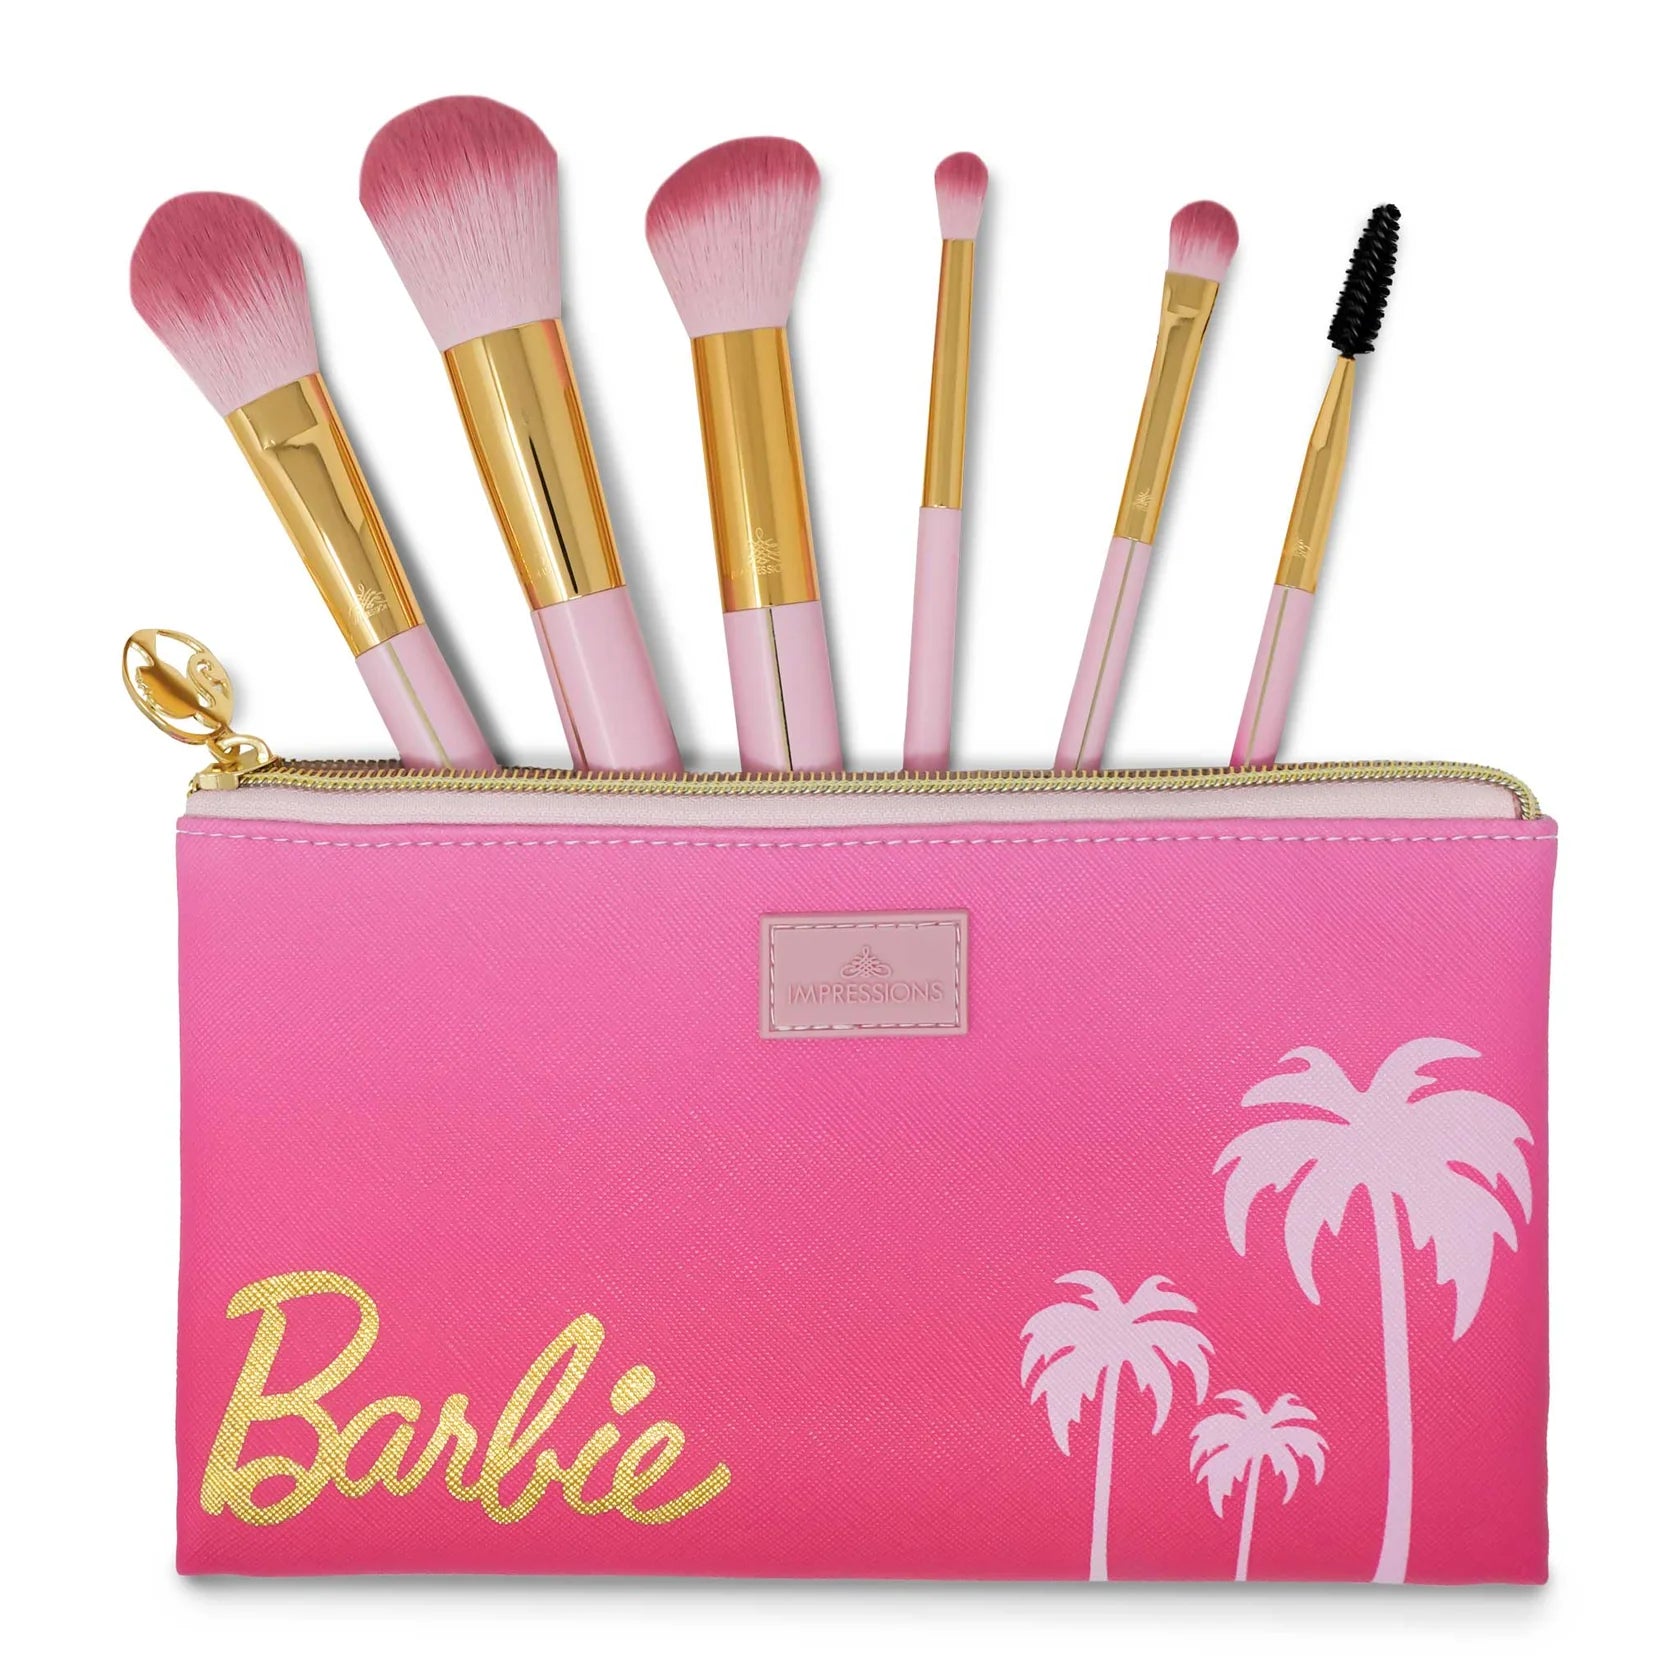 Barbie Malibu Brush Gift Set